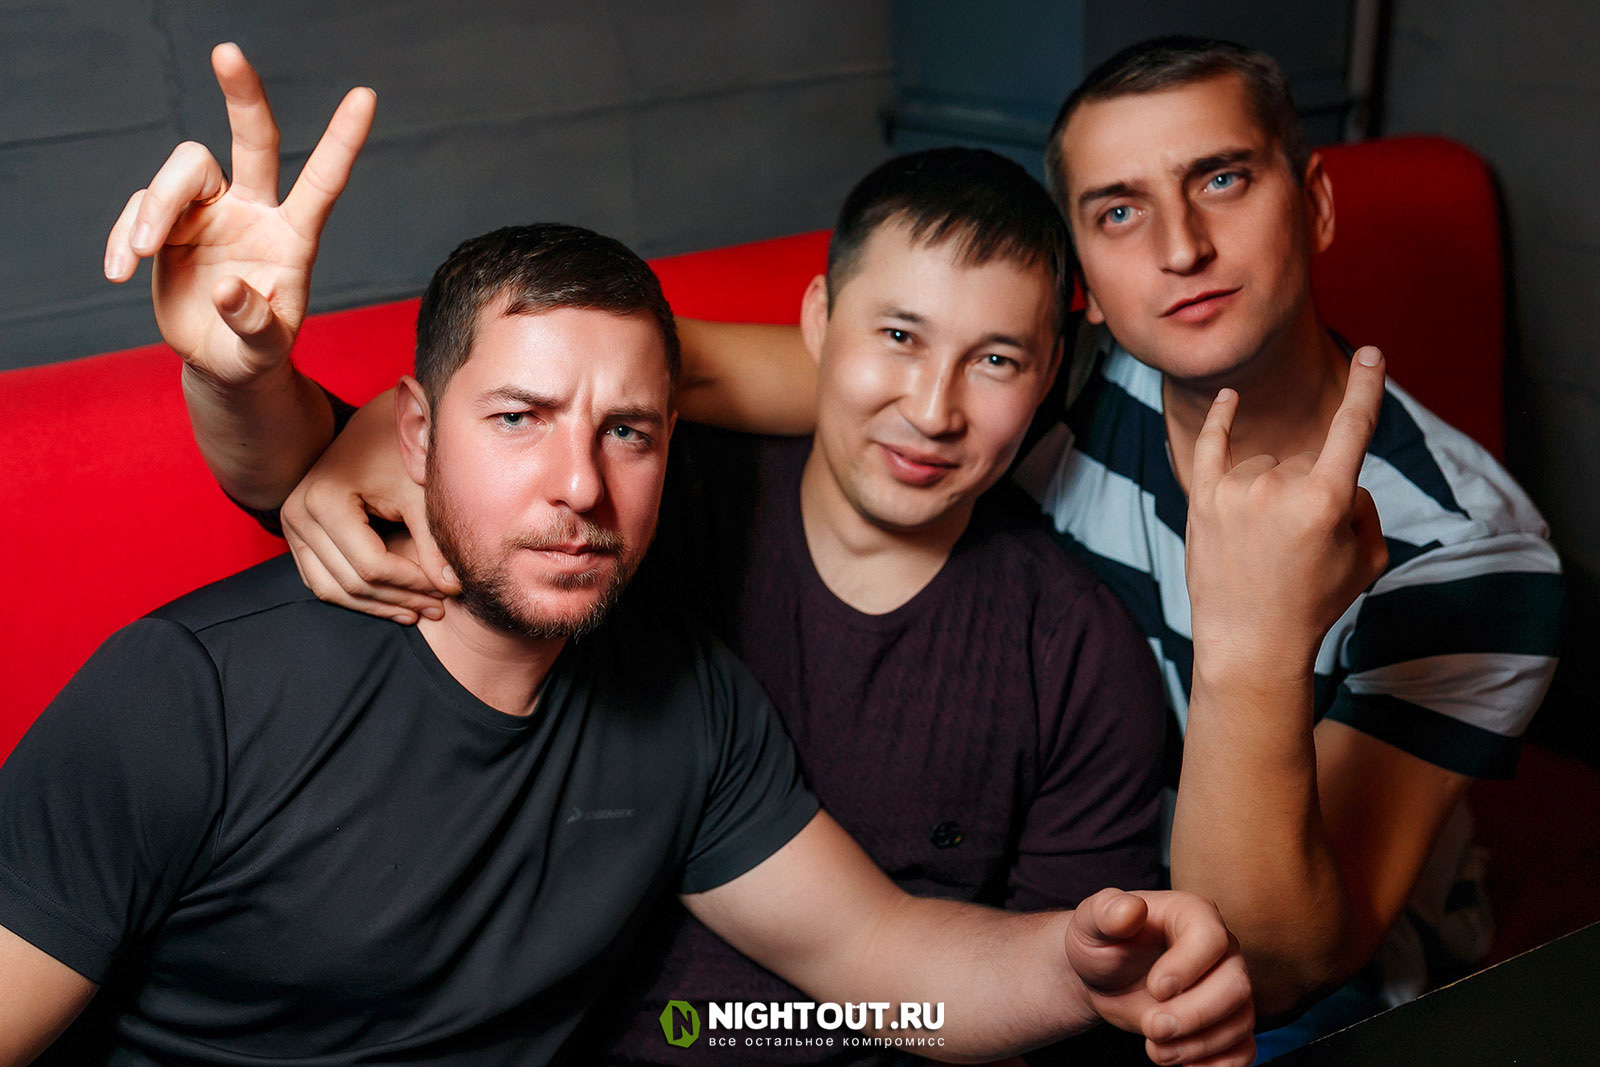 Nightout. Nightout Новосибирск. Nightout фотоотчеты. Найтаут Барнаул фотоотчет. Найтаут Барнаул фотоотчет 2014 года.